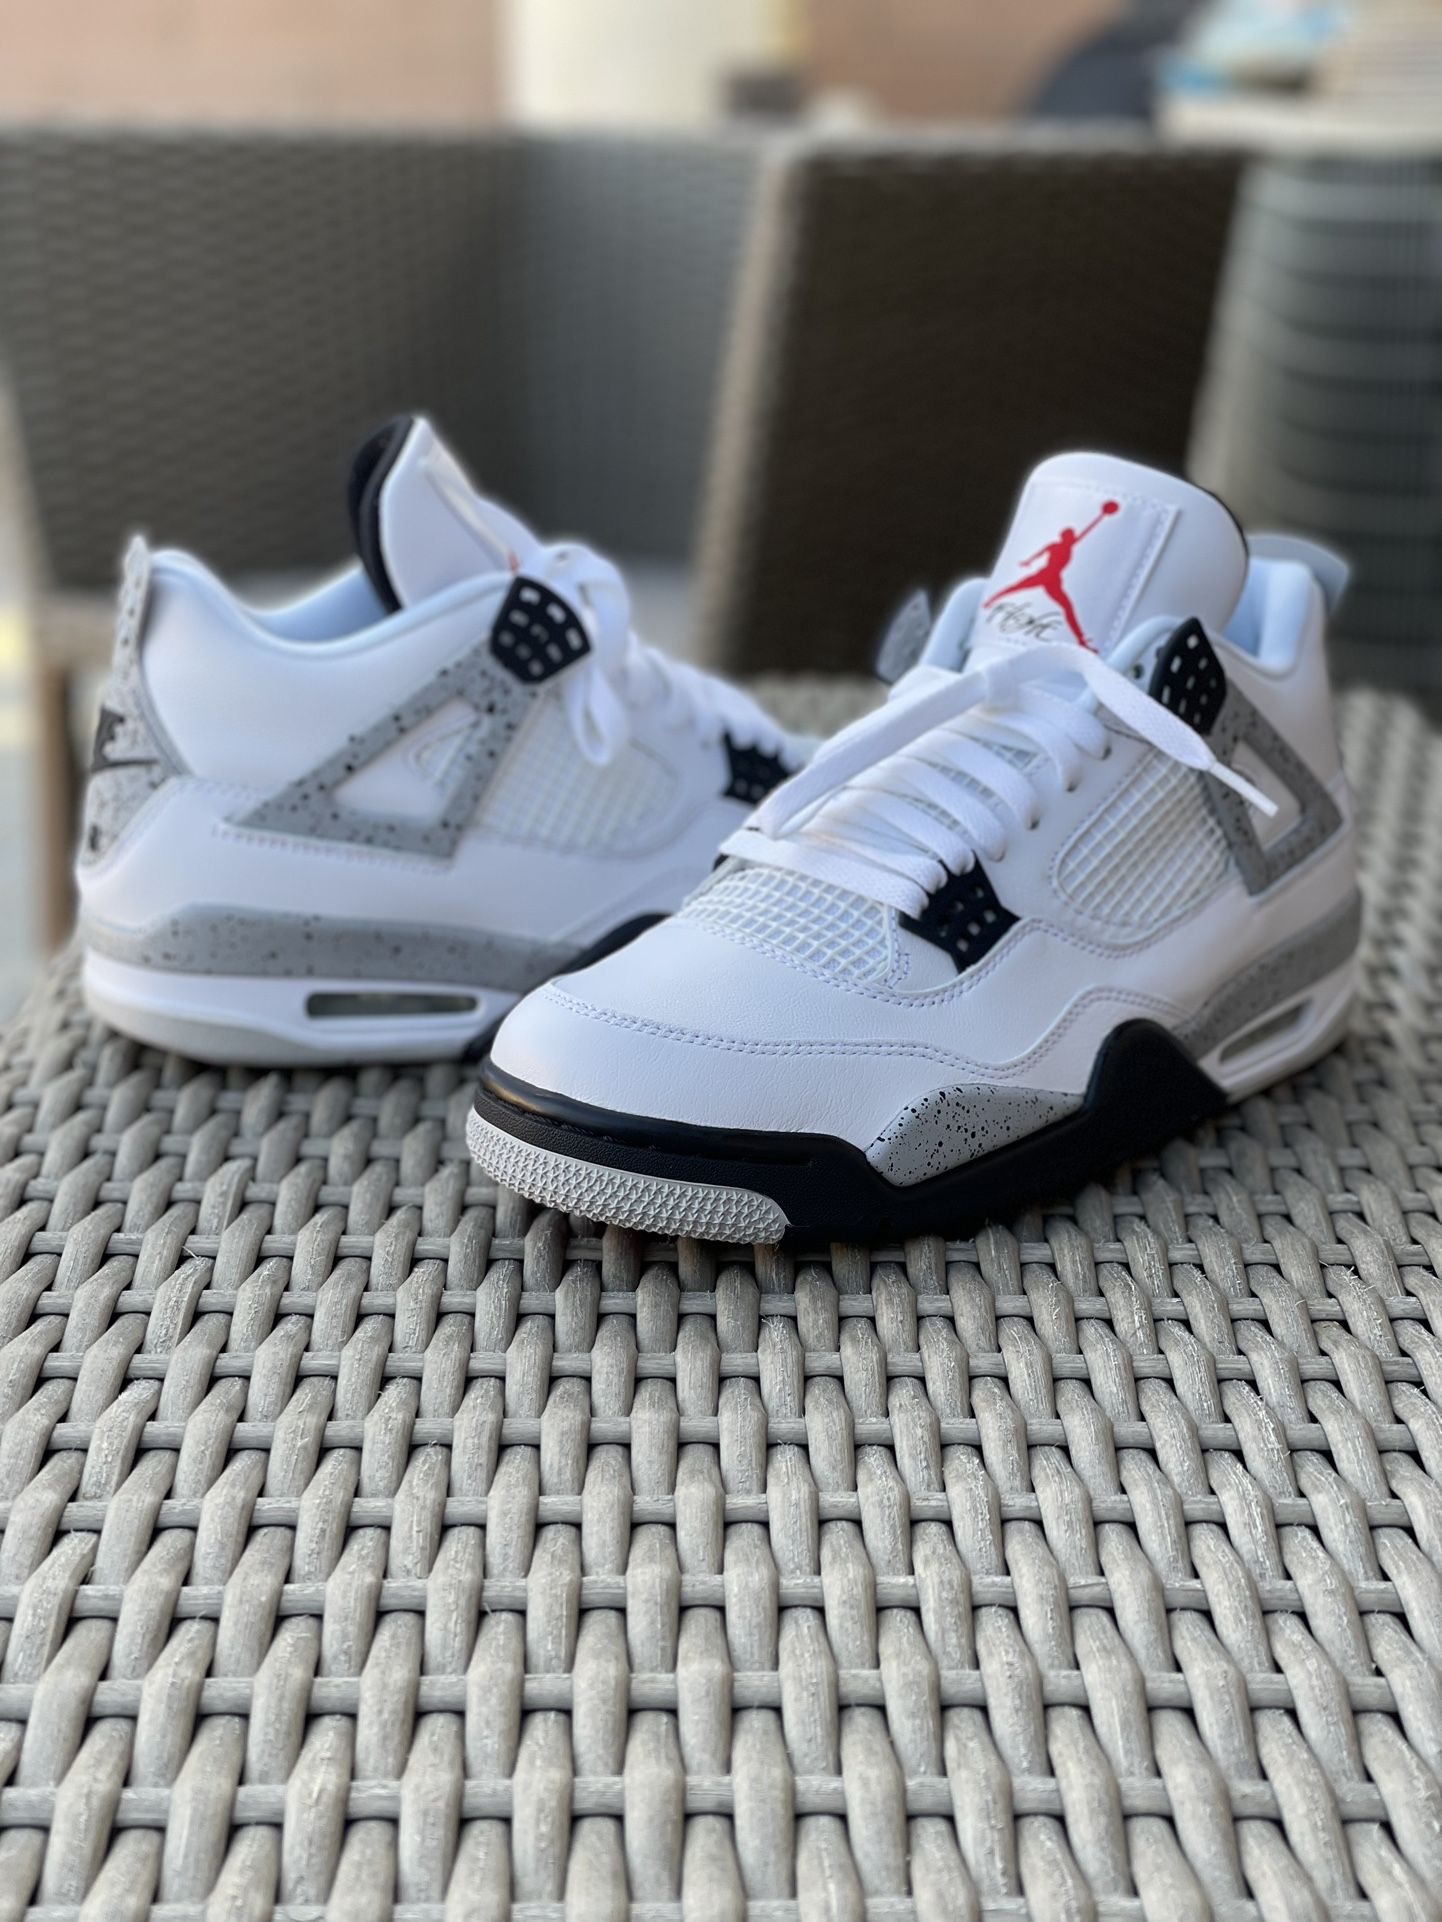 Jordan 4 Retro White Cement (2016) Size 10 New Vintage